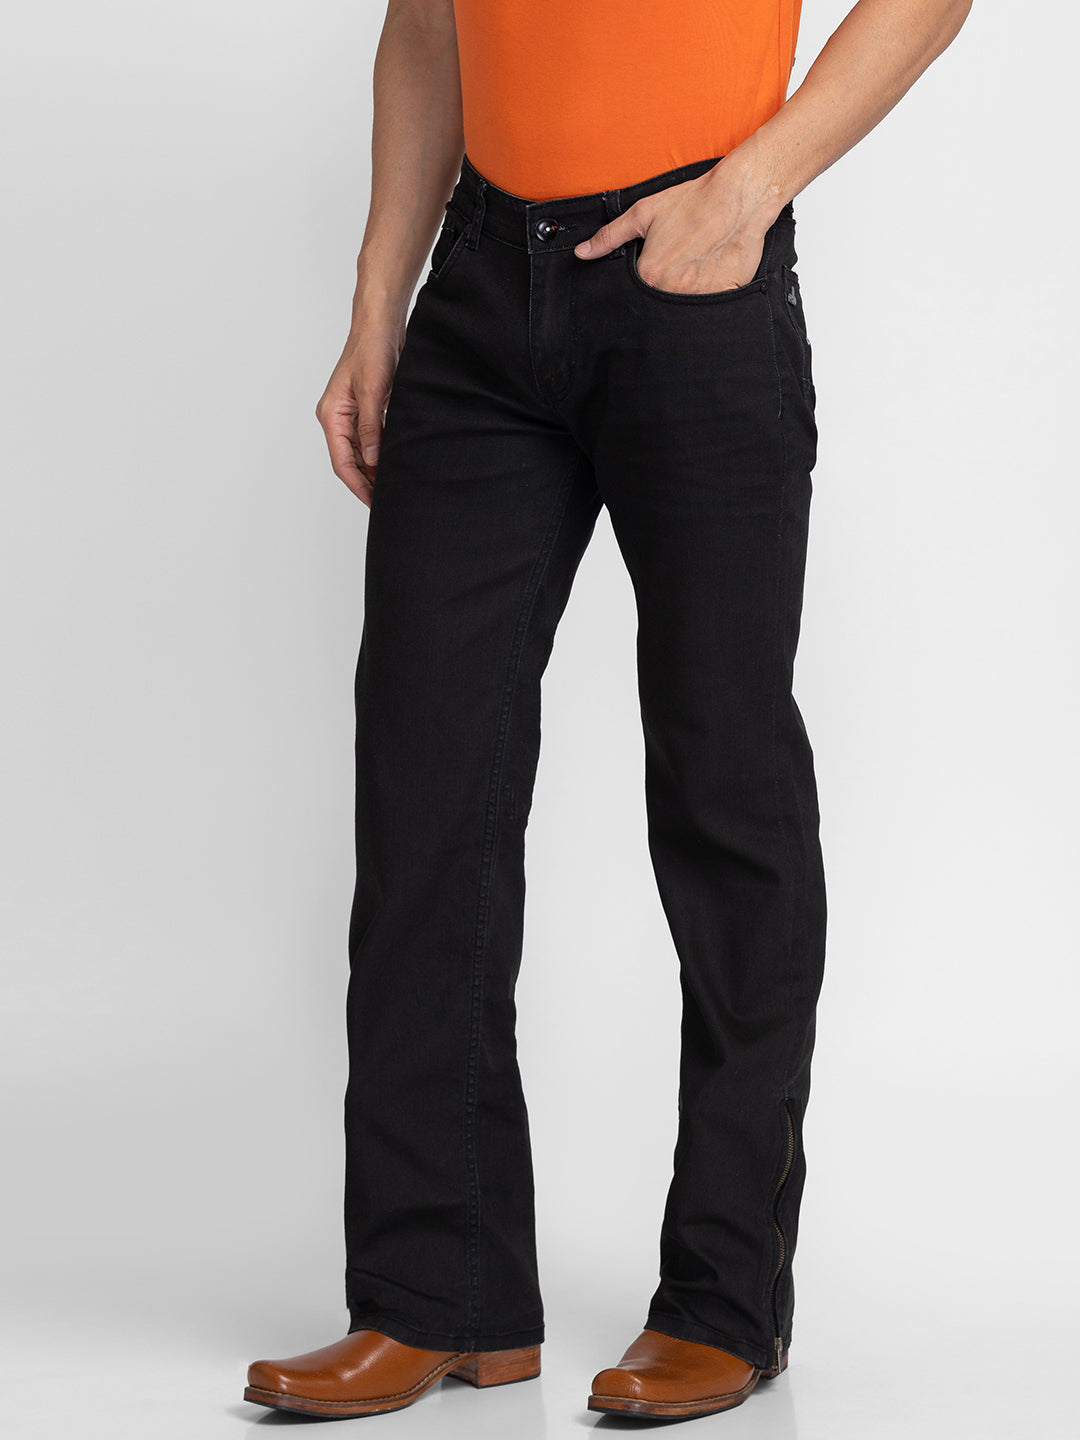 Jet Black Bootcut Jeans with Zipper Bottoms